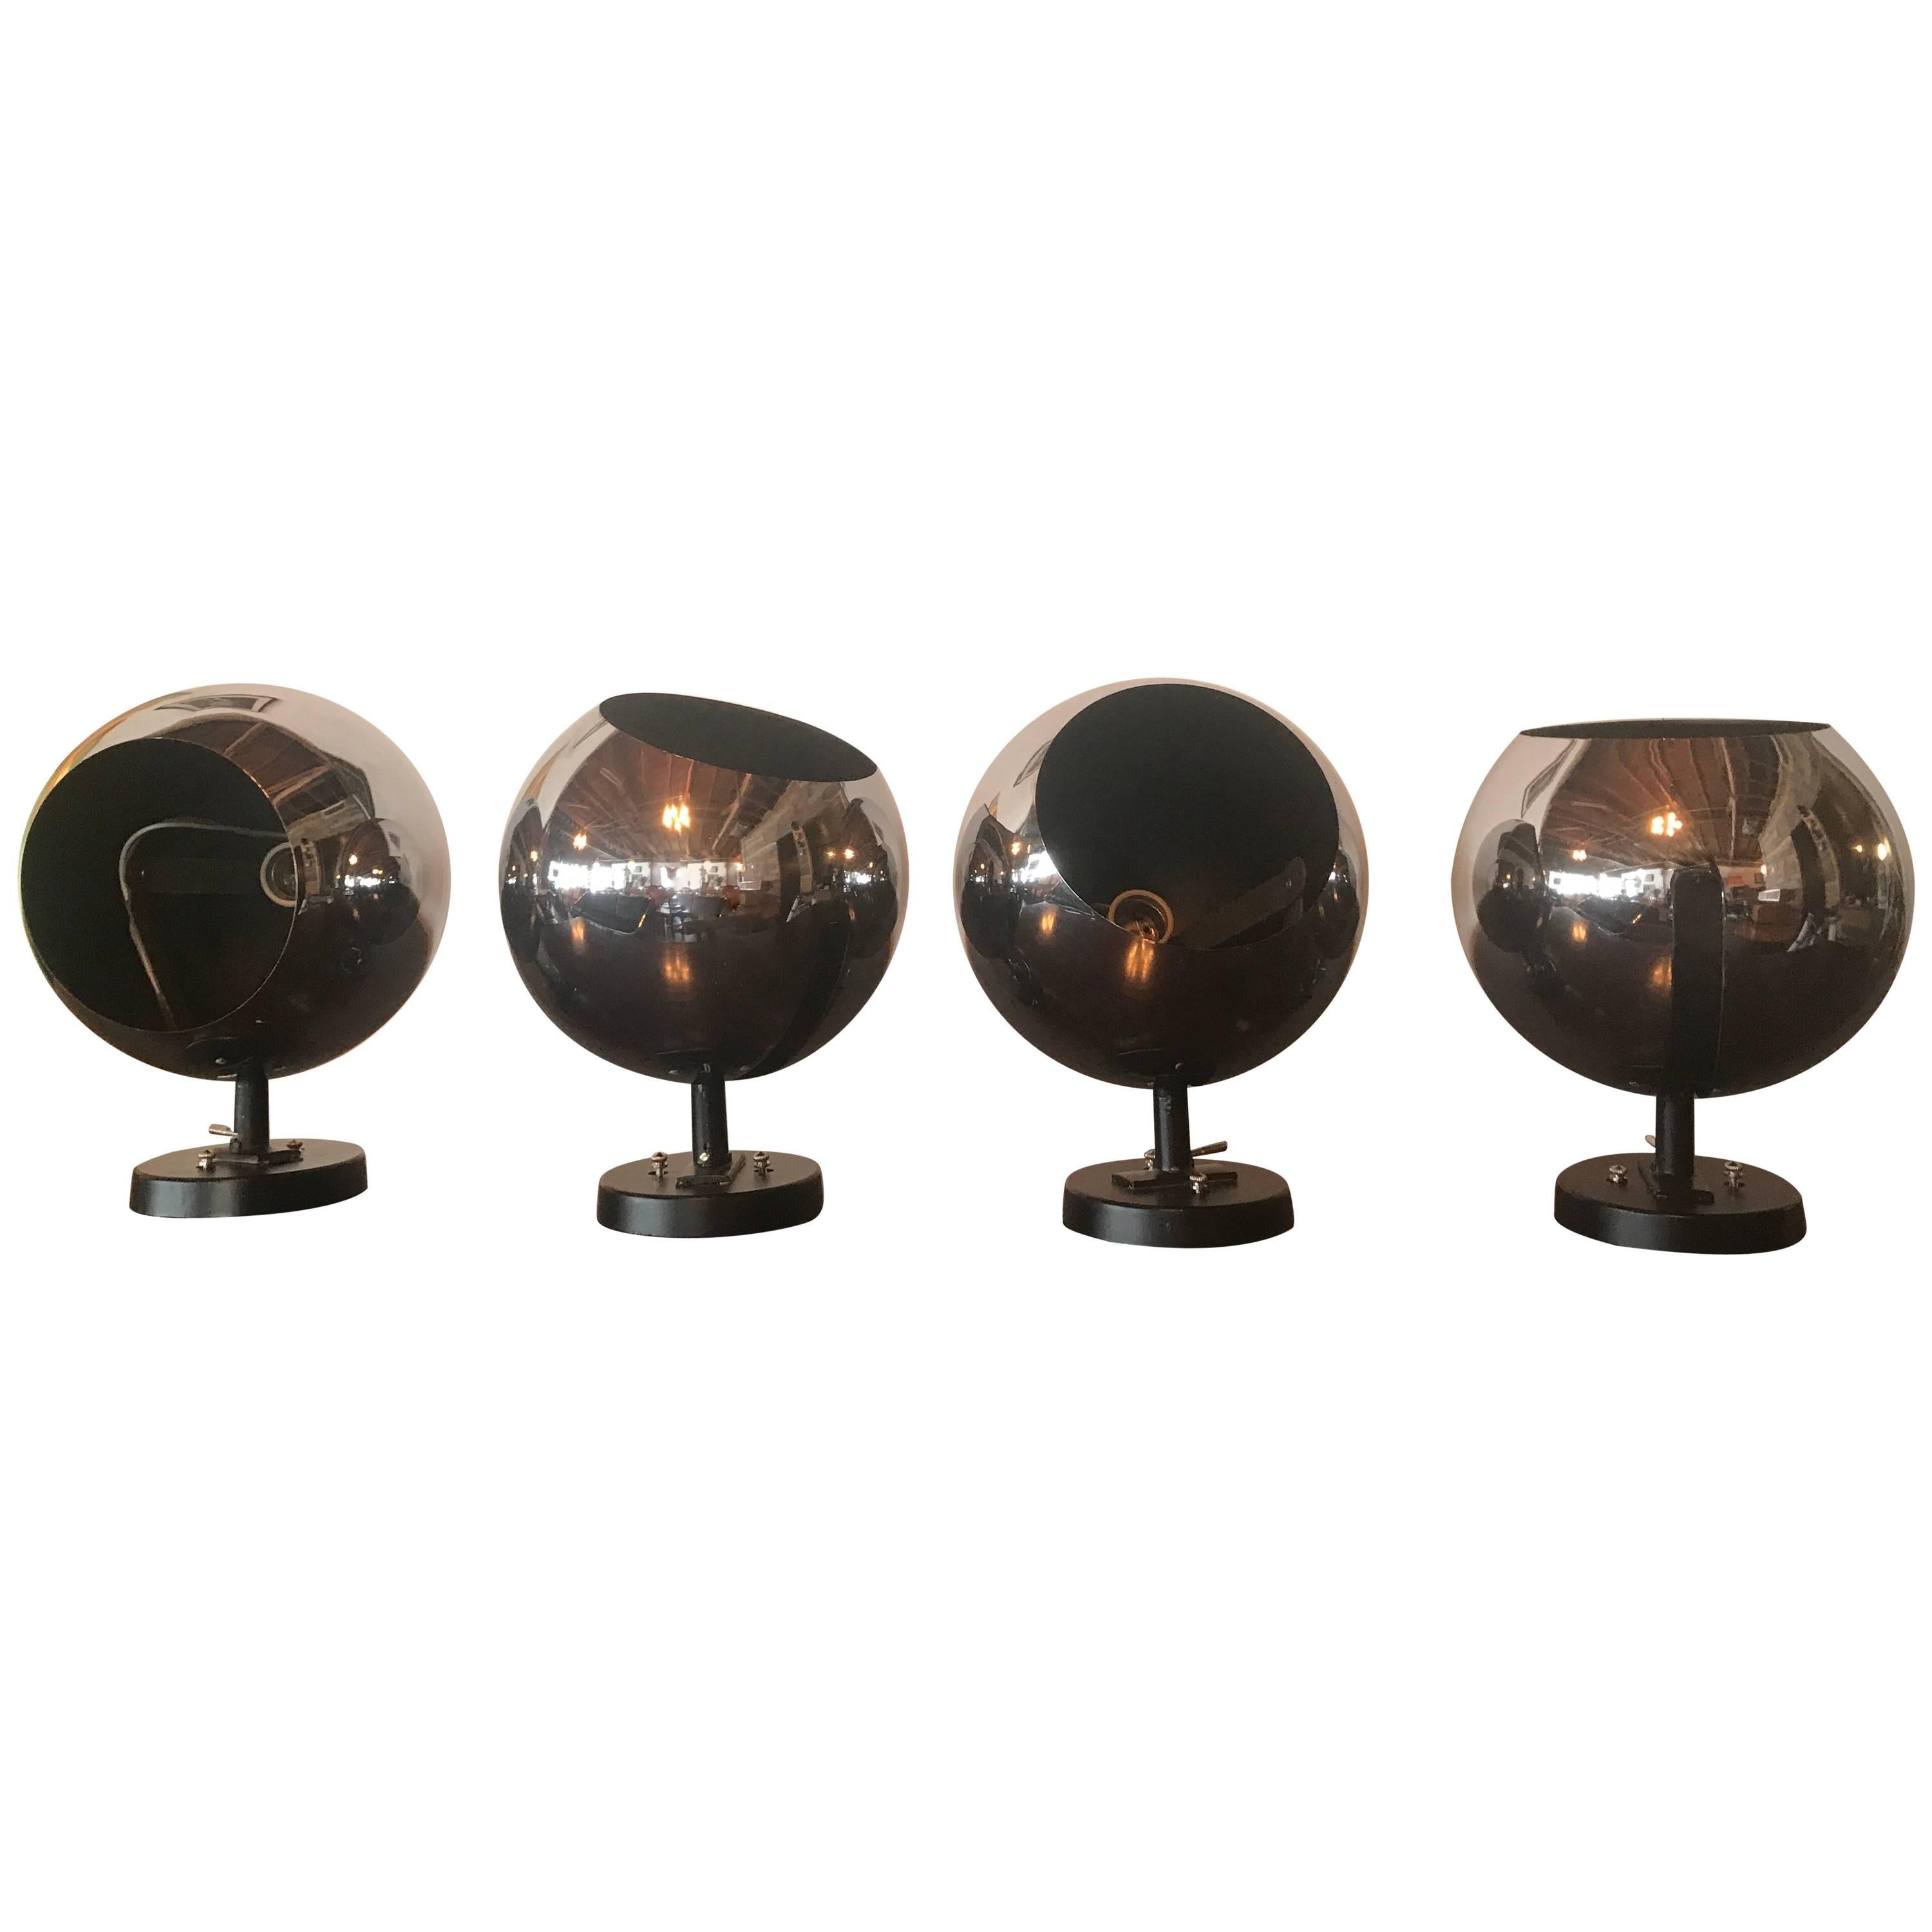 Vintage Midcentury Chrome Ball Wall or Ceiling Sconce Lightolier Light